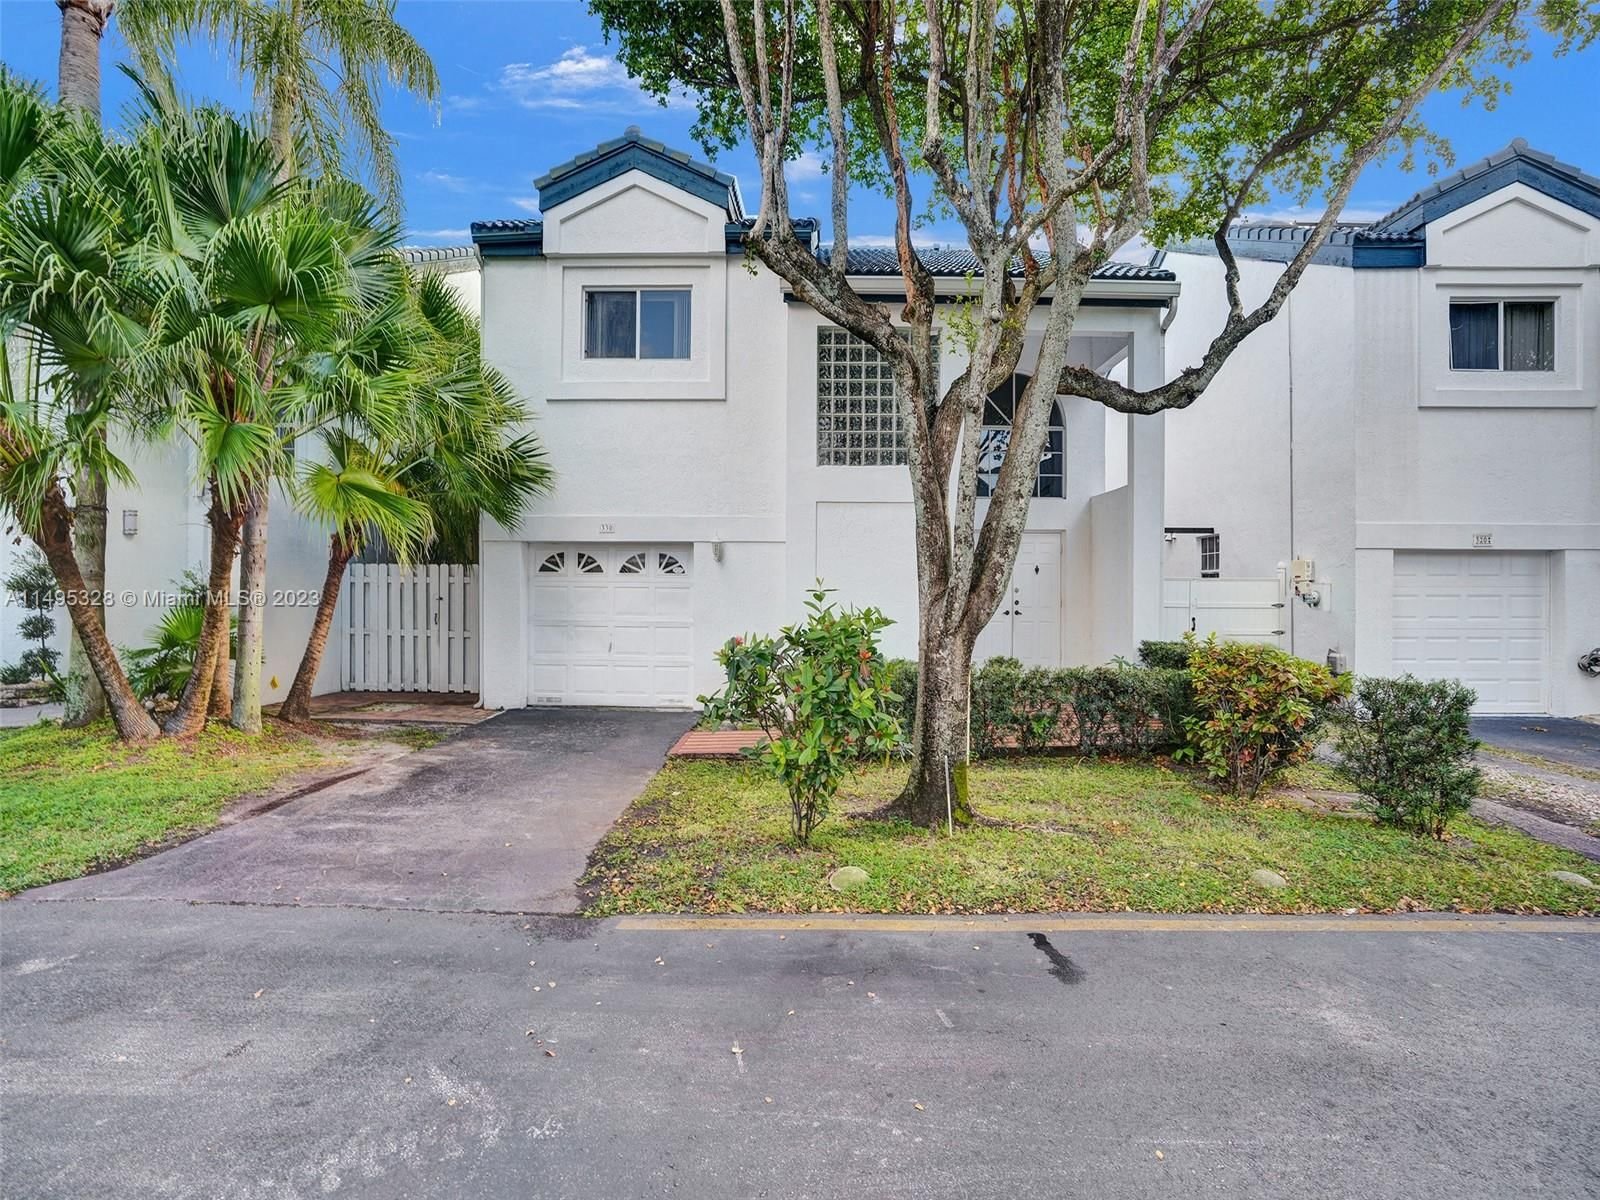 Real estate property located at 330 211th St, Miami-Dade County, SAN SIMEON HOMES, Miami, FL